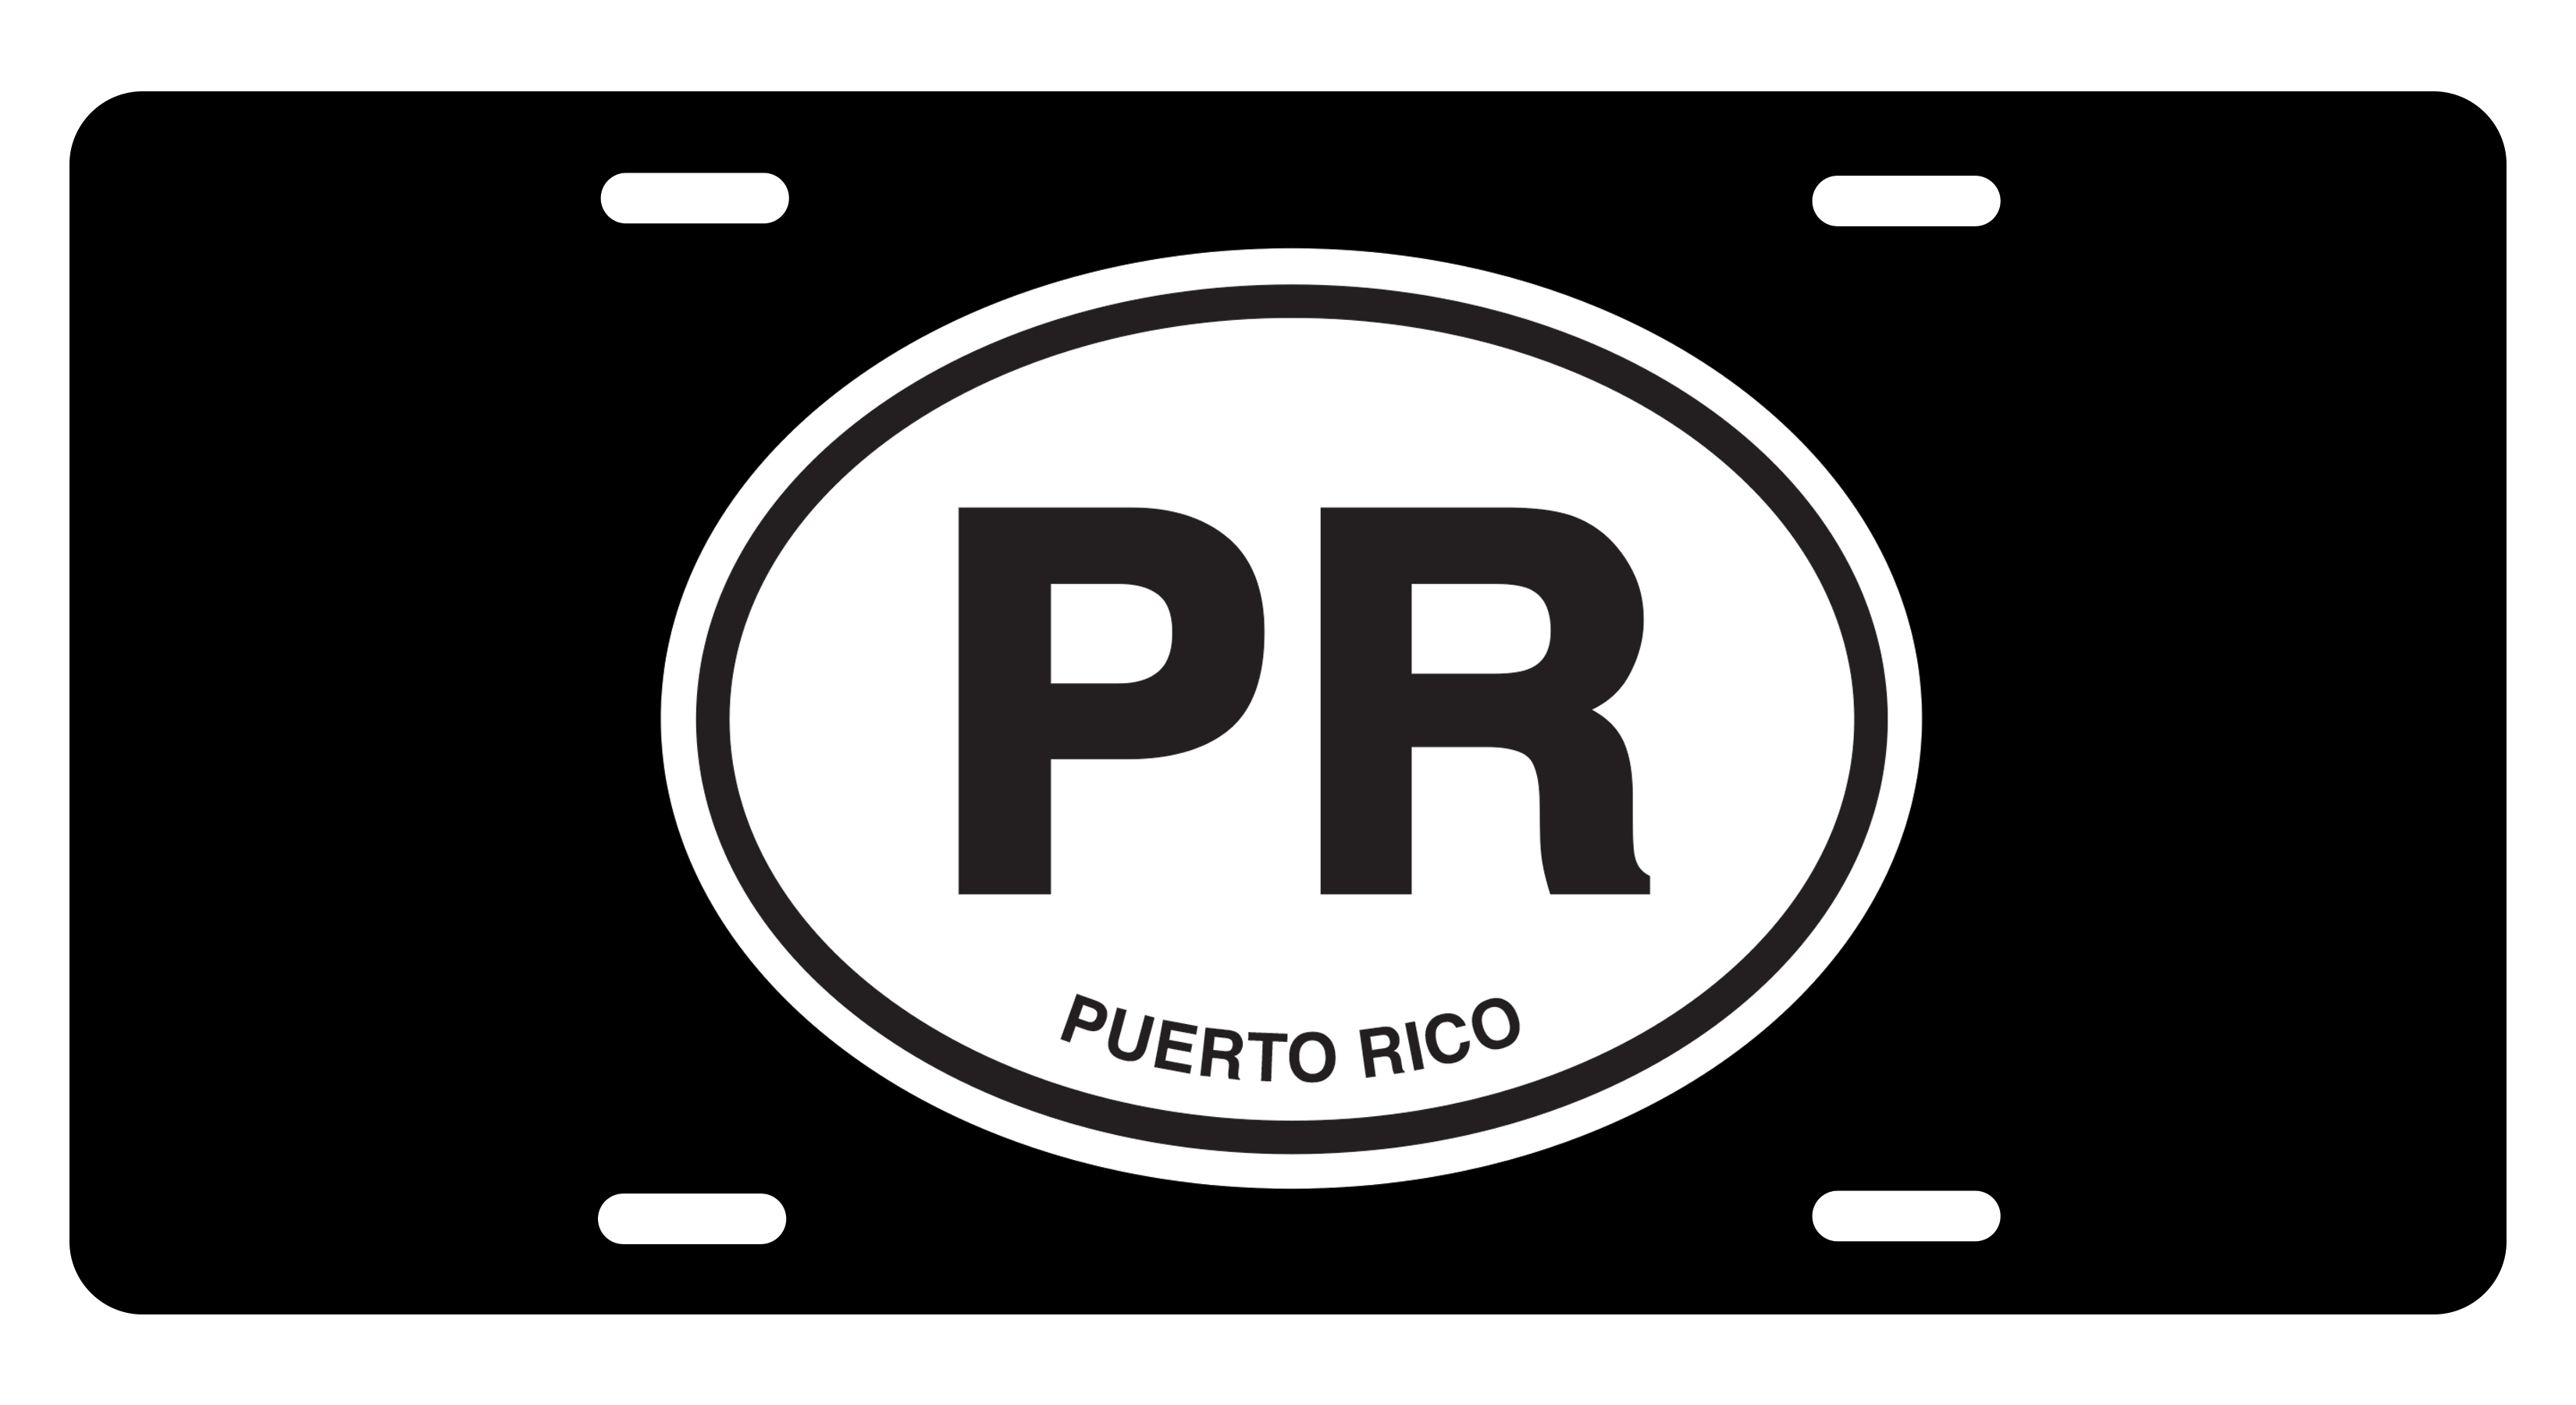 Puerto Rico License Plates - My Destination Location